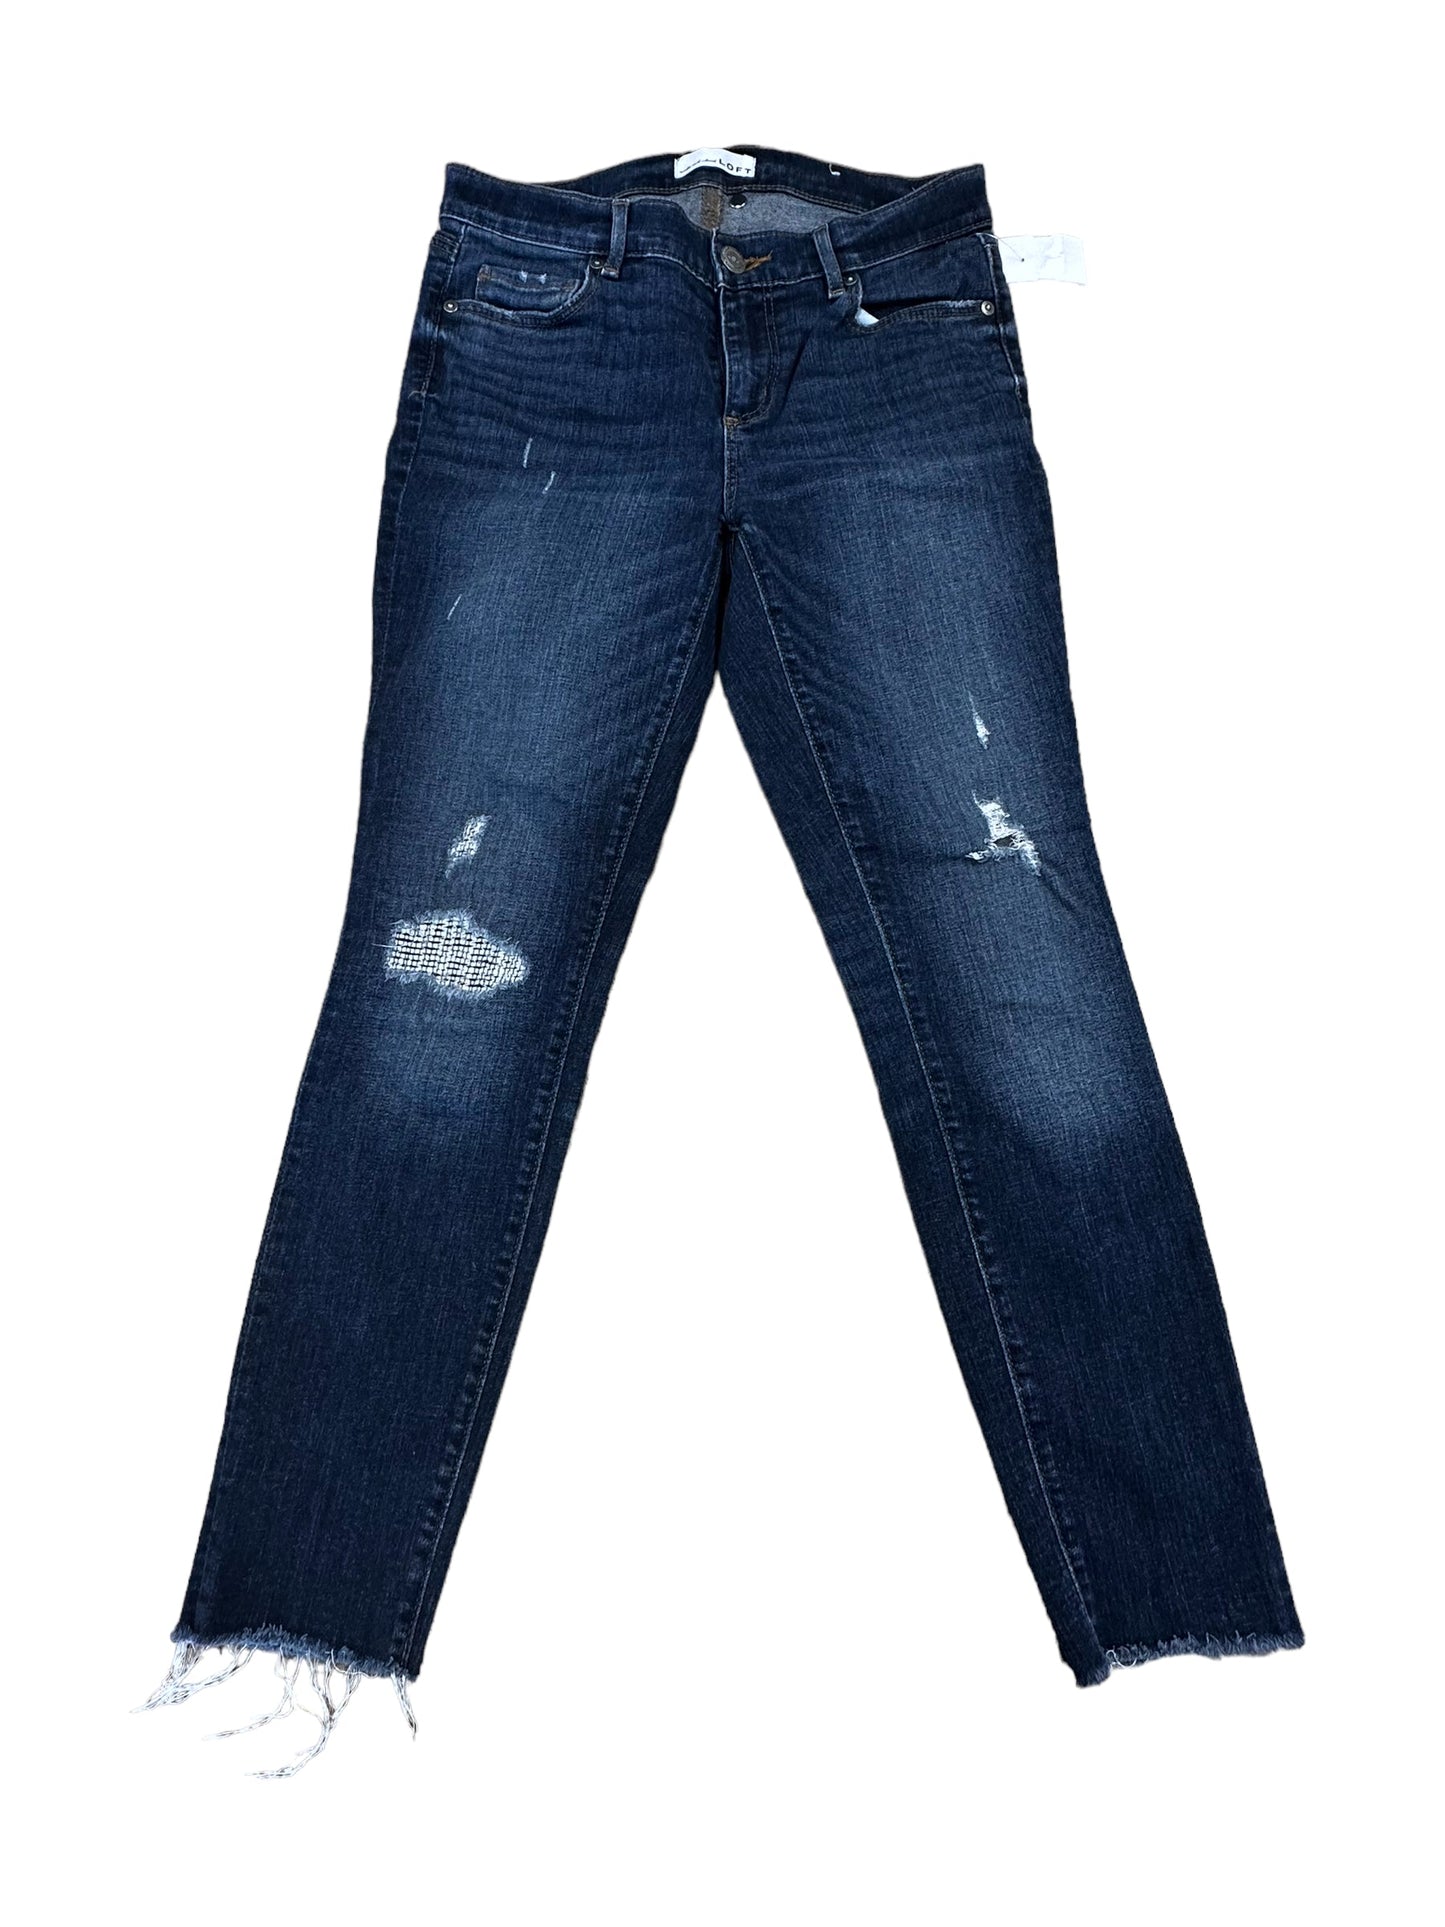 Jeans Skinny By Loft  Size: 4